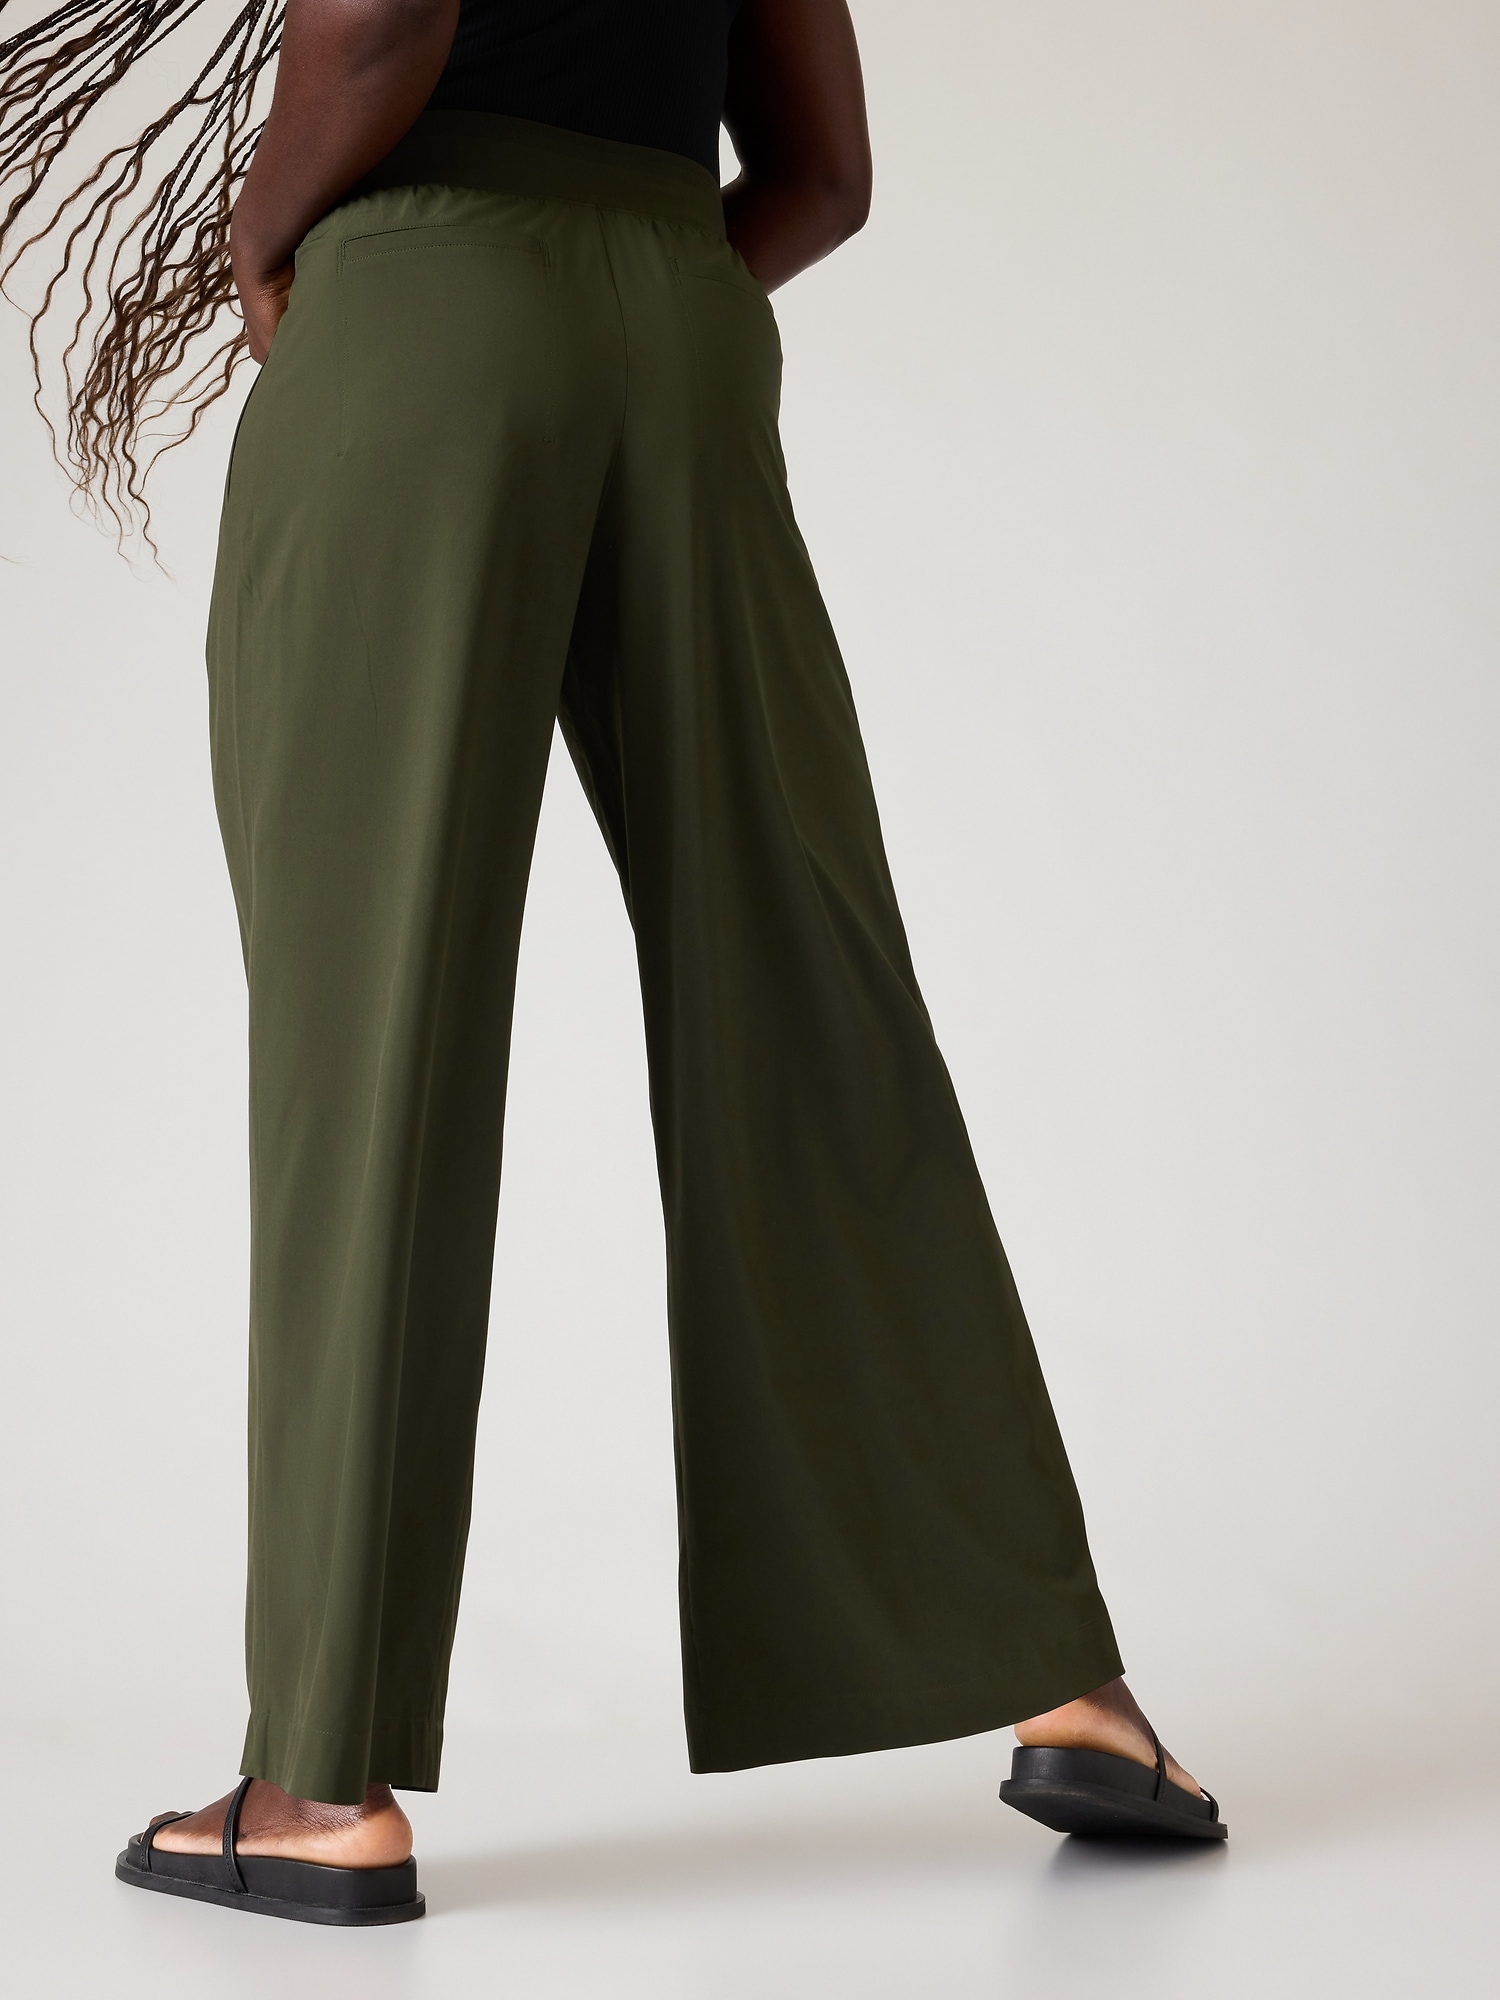 Athleta Olive Green Women's Pants With Zipper Pockets & Legs Size